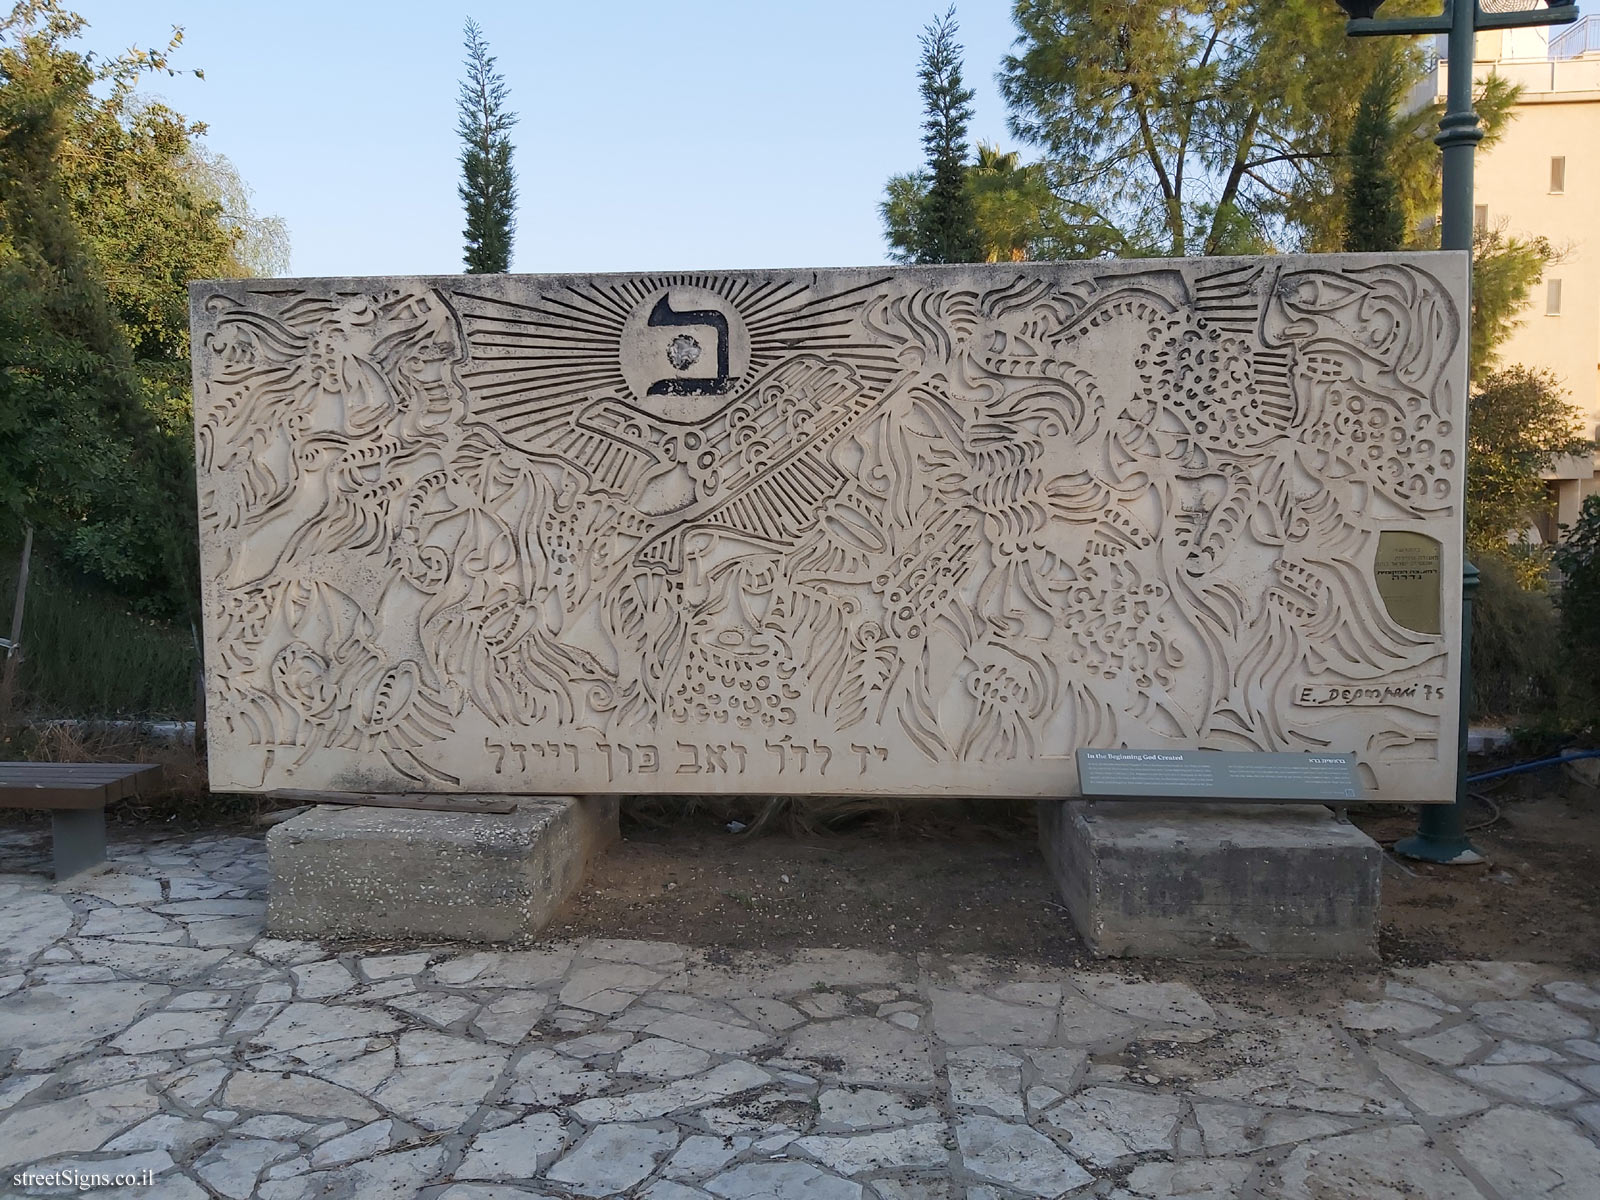 In the Beginning God Created - Ernst Degasperi’s outdoor sculpture/monument - Ha-Biluyim St 40, Gedera, Israel